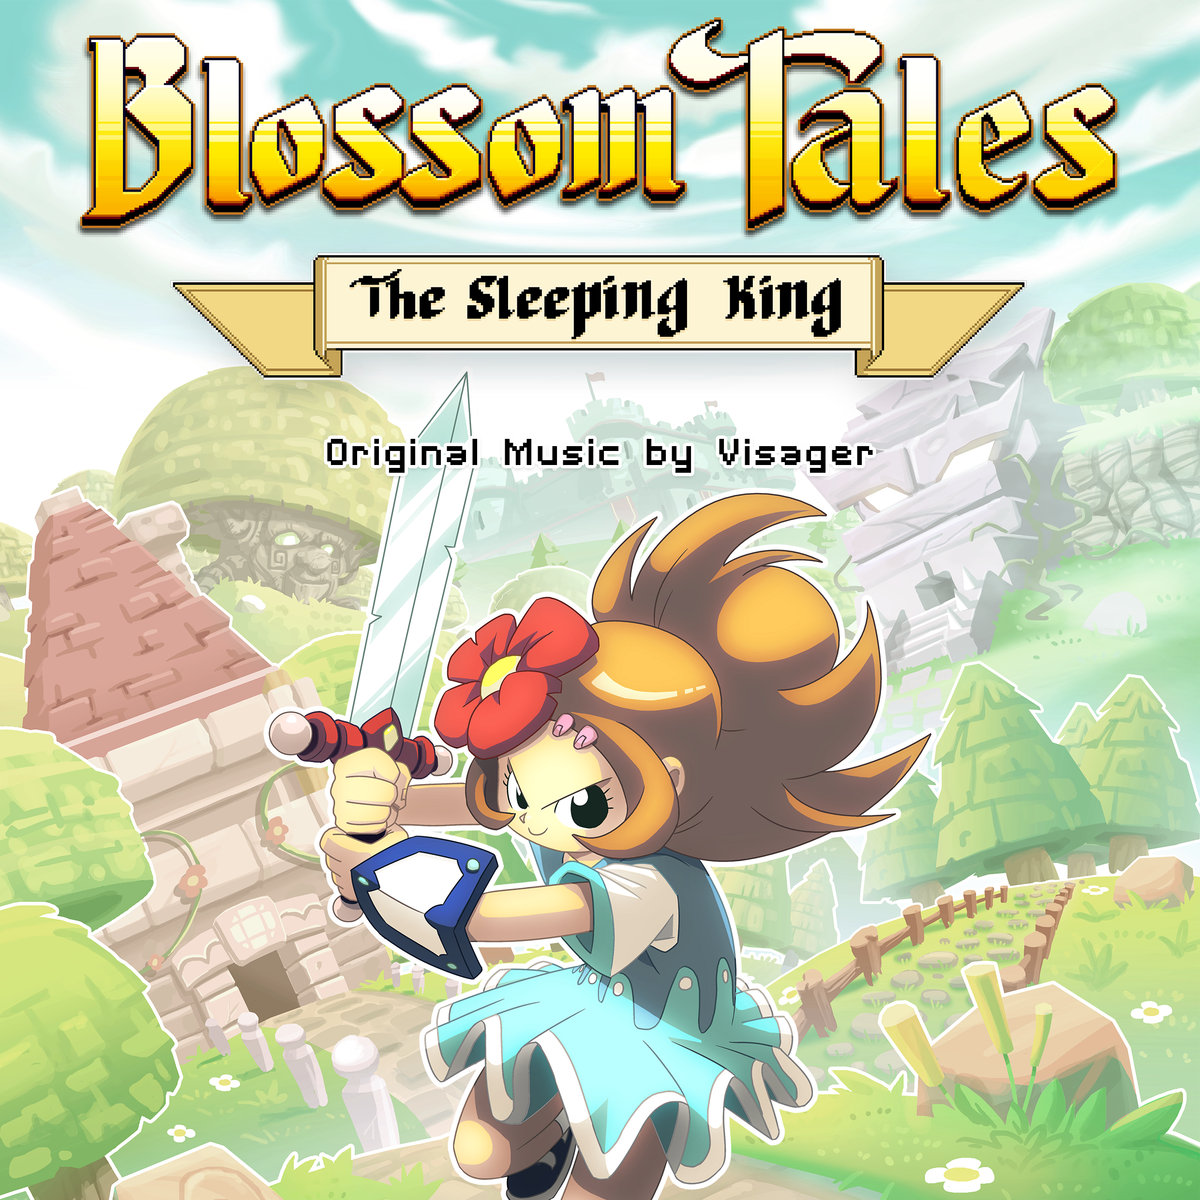 Blossom играть. Blossom Tales. Blossom Tales: the sleeping King. Blossom Tales игры похожие Switch. Логическая игра Blossom.